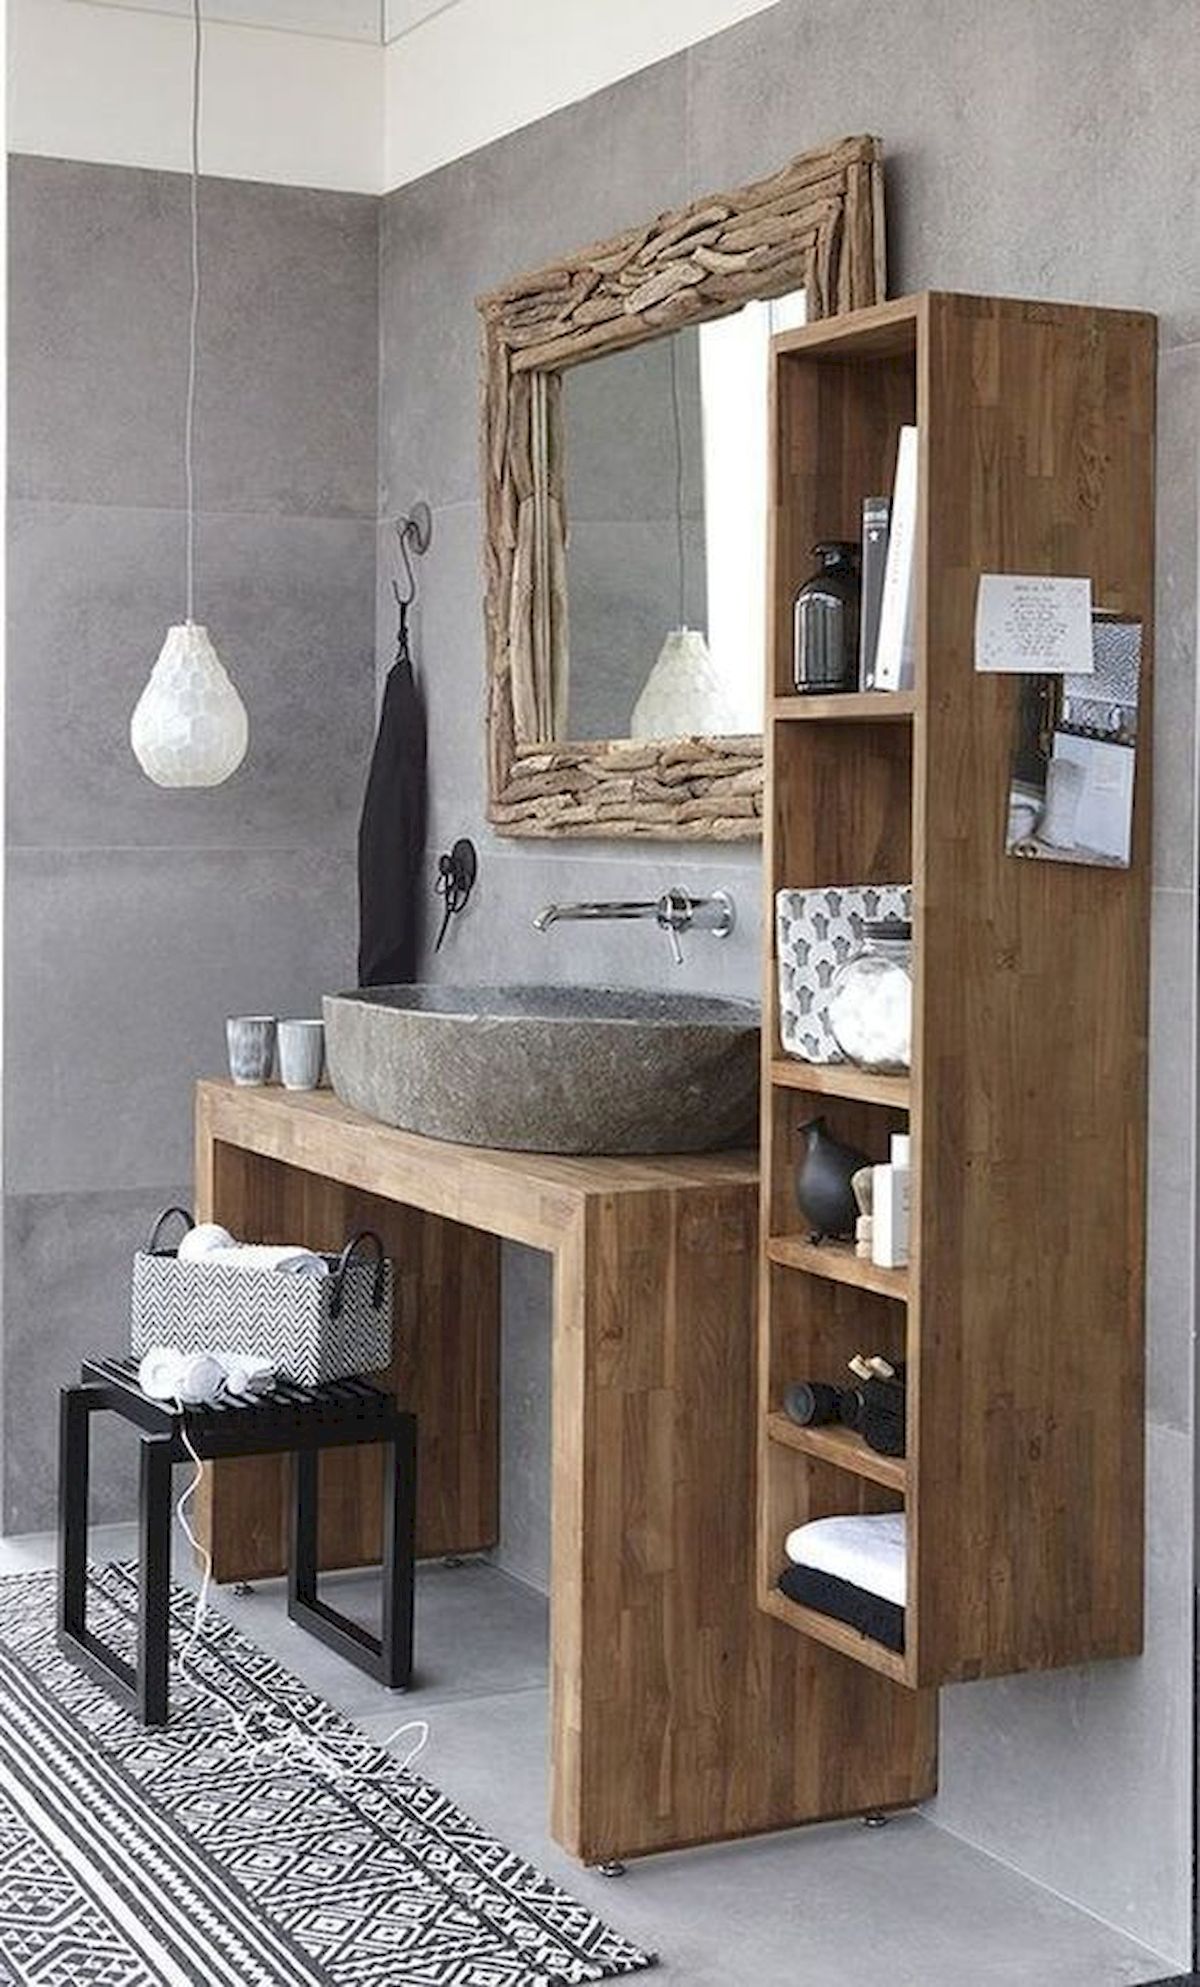 50 Brilliant Storage Design Ideas For Small Bathroom To Make It Look Spacious (5)